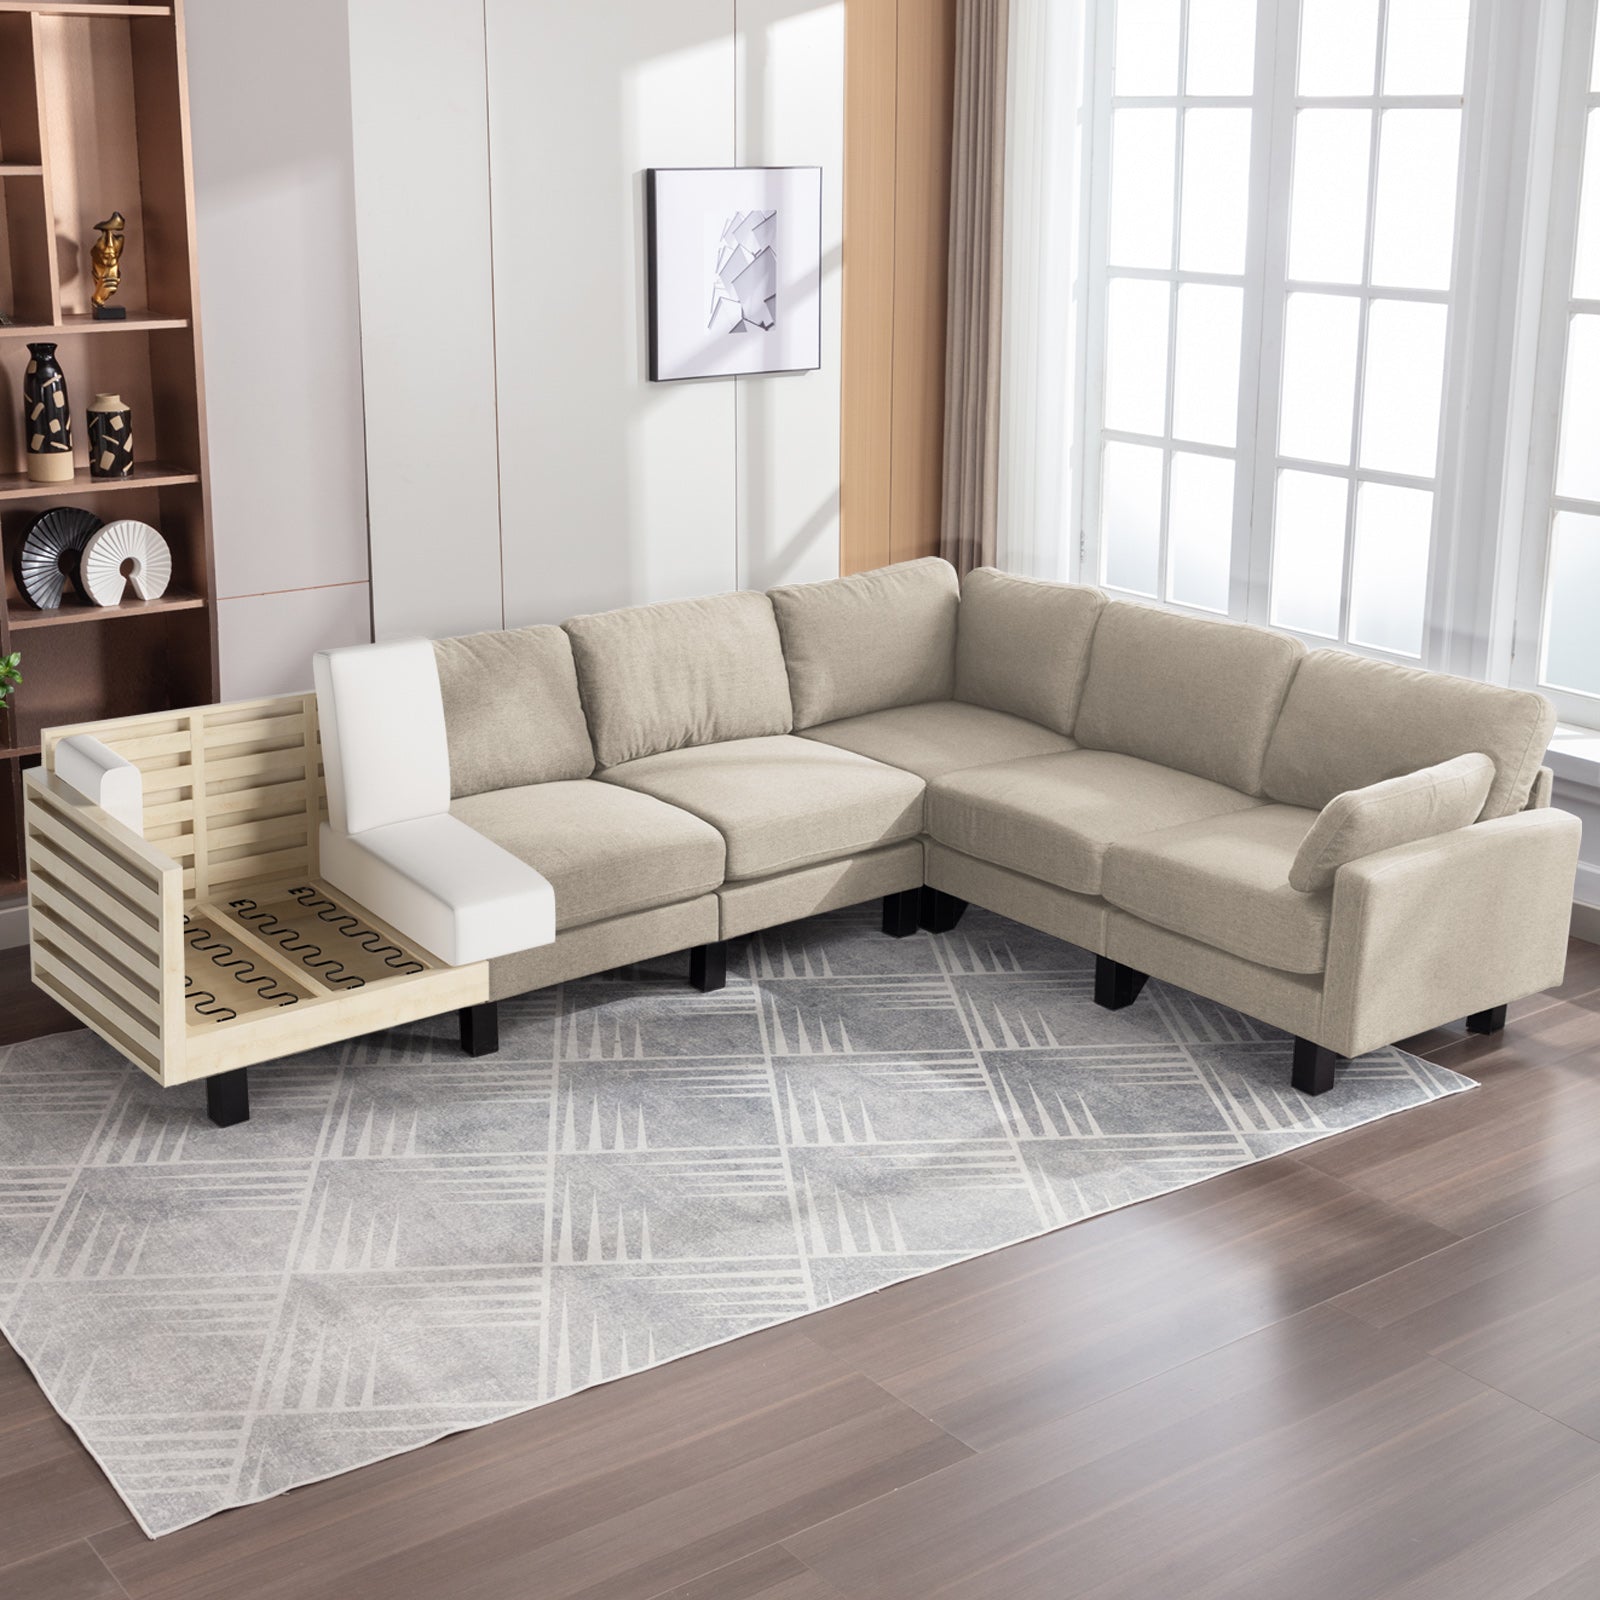 Mjkone L-Shaped Corner Sectional Sofa Set, 6-Seat Modular Sleeper Sofa Couch with Linen Upholstered, L-Shaped Corner Sofa with Solid Wood Legs, Living Room Furniture Set